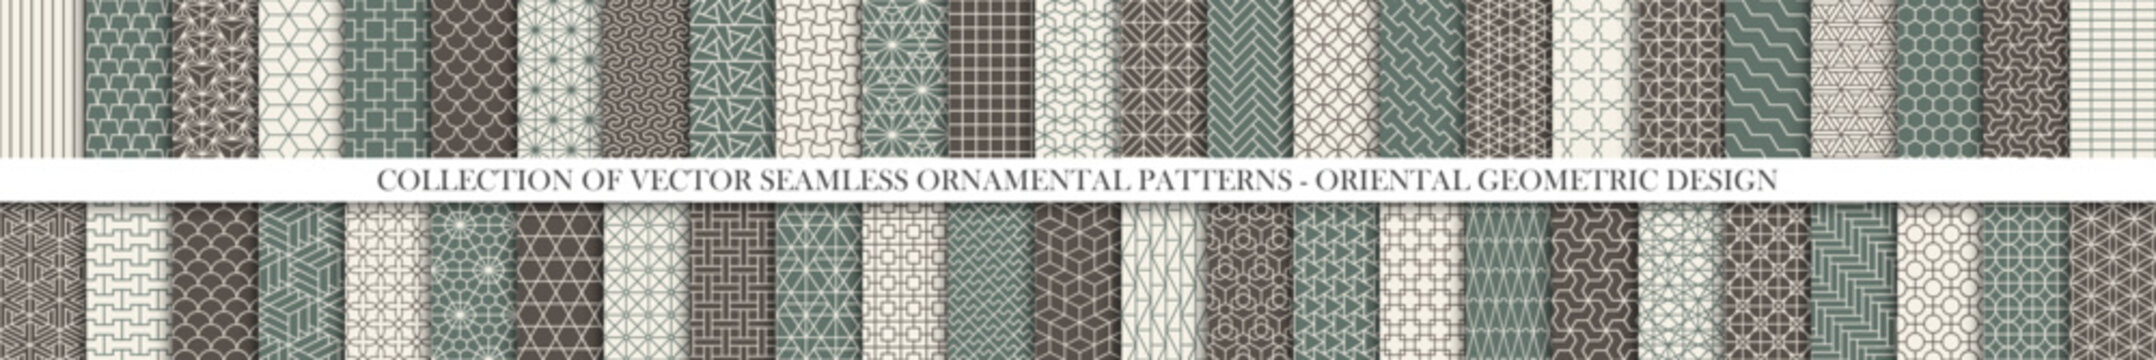 Collection of seamless ornamental vector patterns. Elegant color oriental backgrounds. Creative tile mosaic design. Big bundle of geometry grid arabic prints